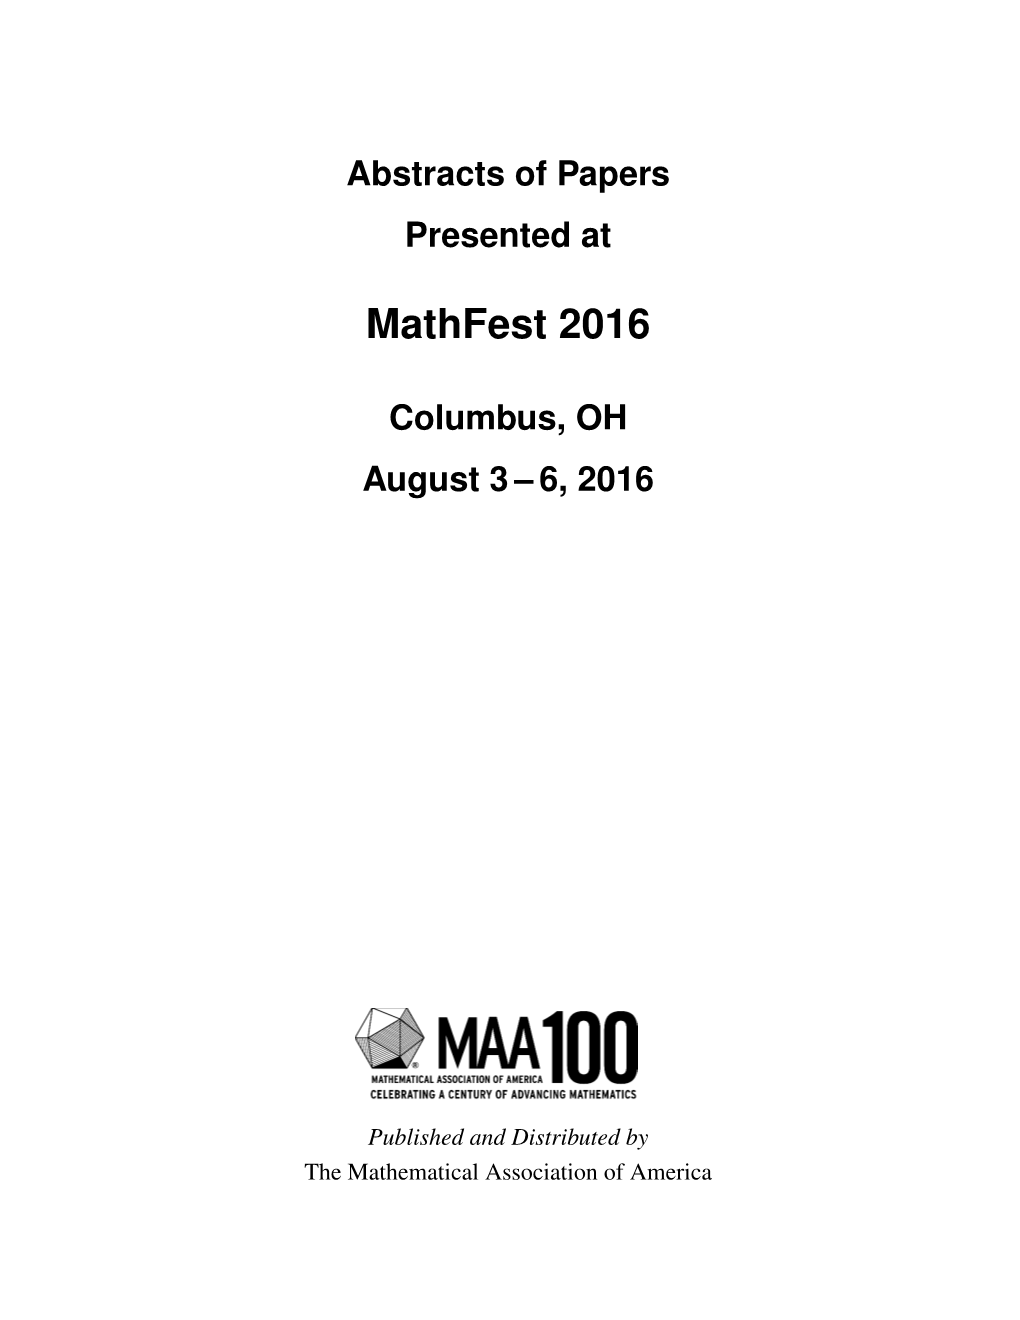 Mathfest 2016